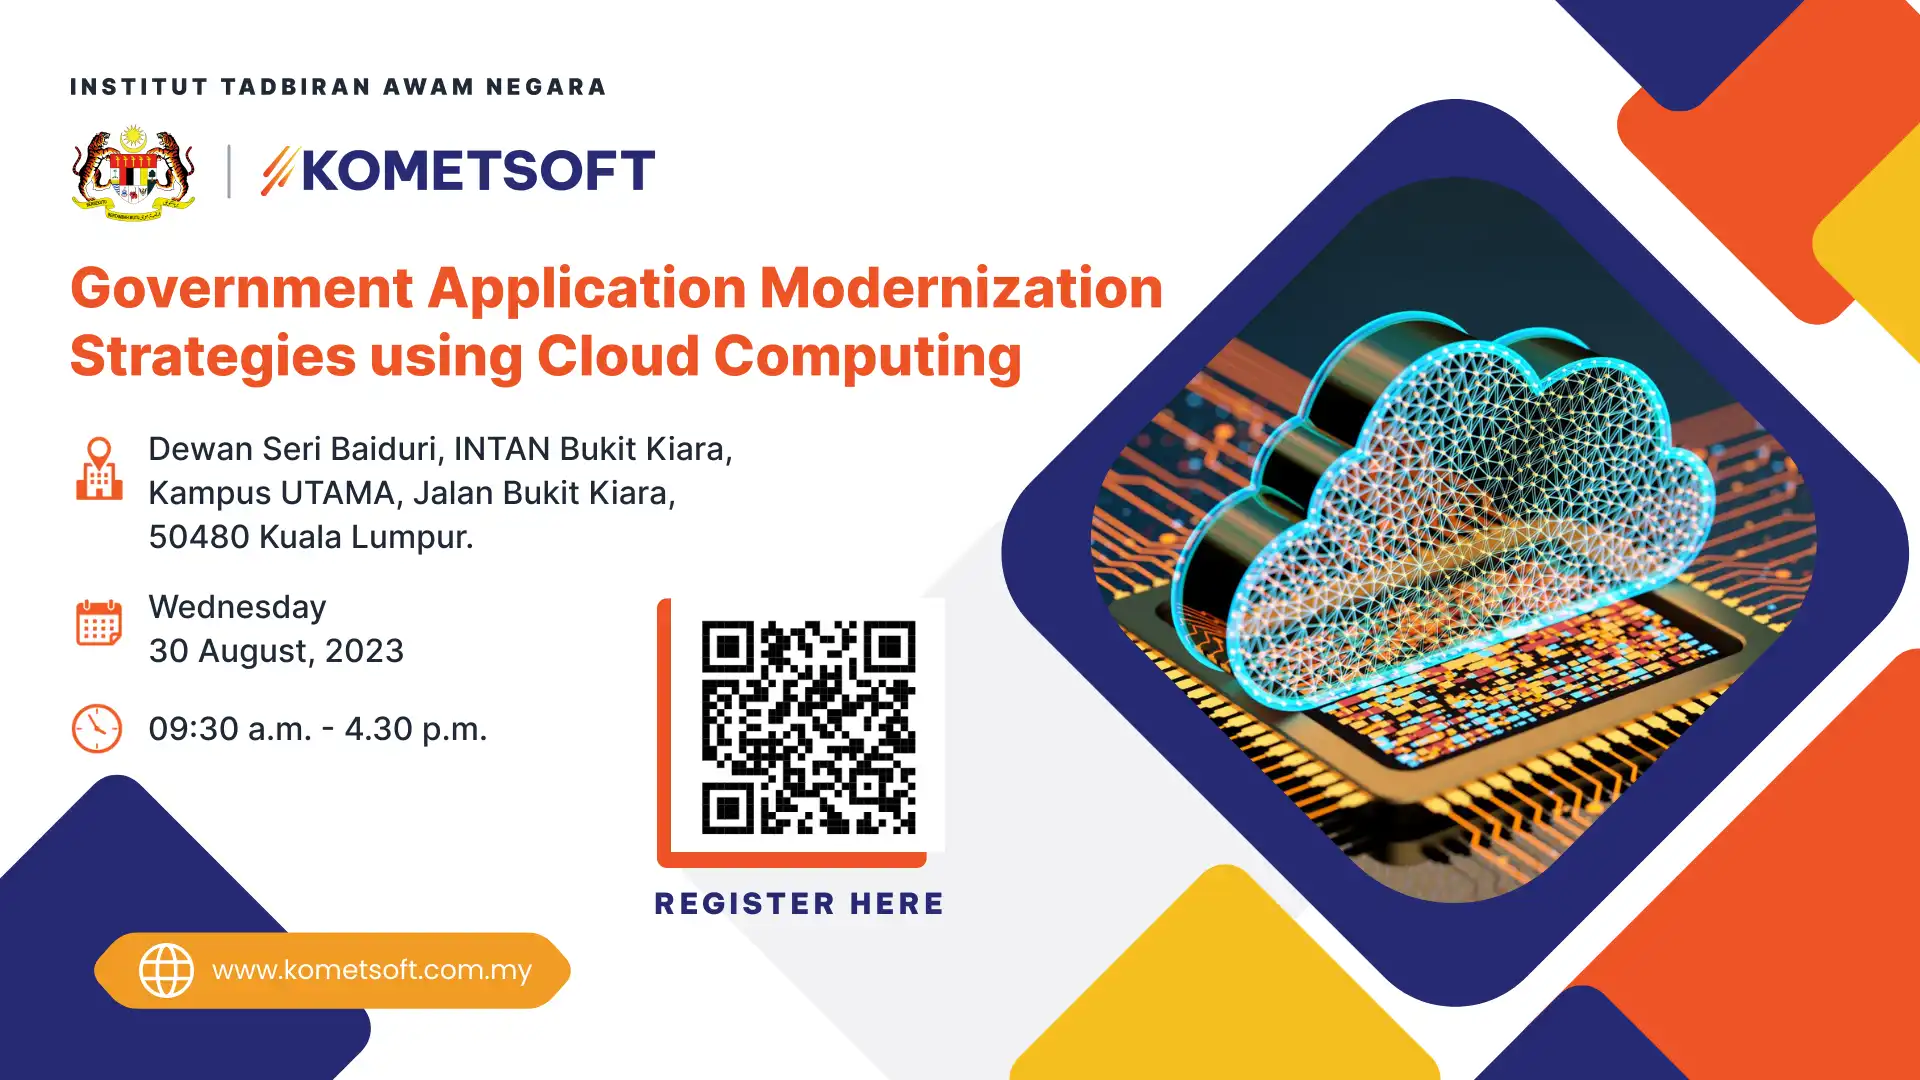 Government Application Modernization using Cloud Computing Program Invitation